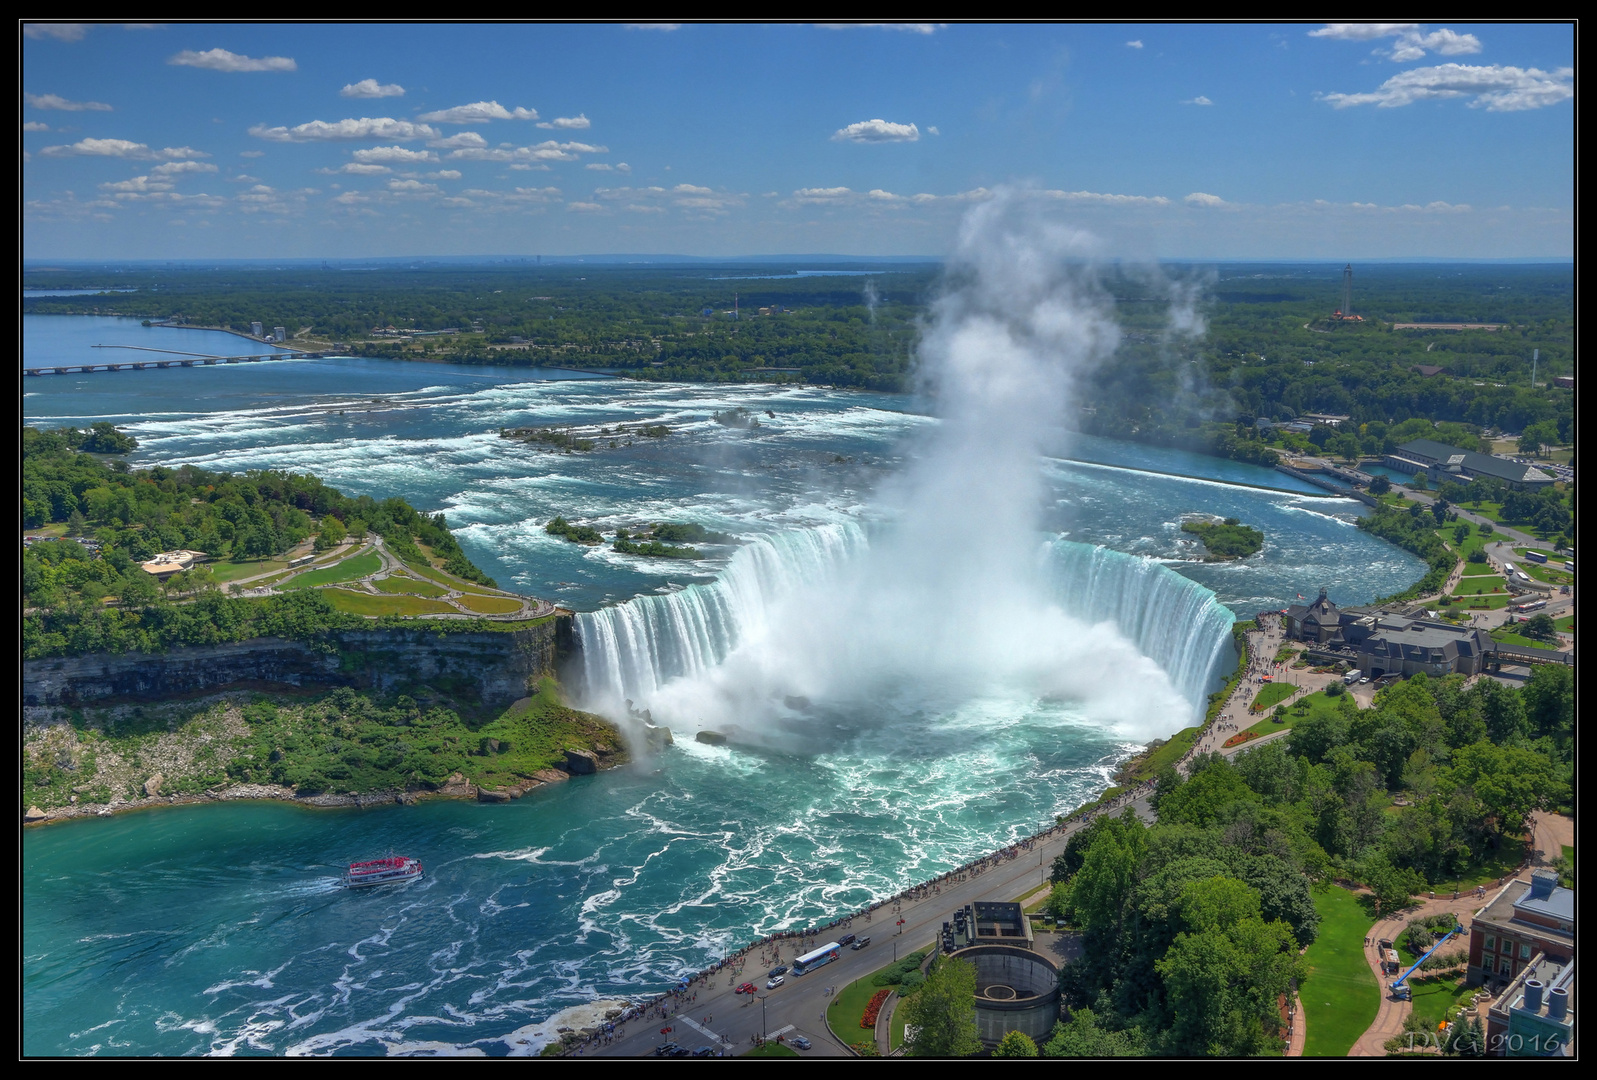 Horseshoe falls on the Niagara river